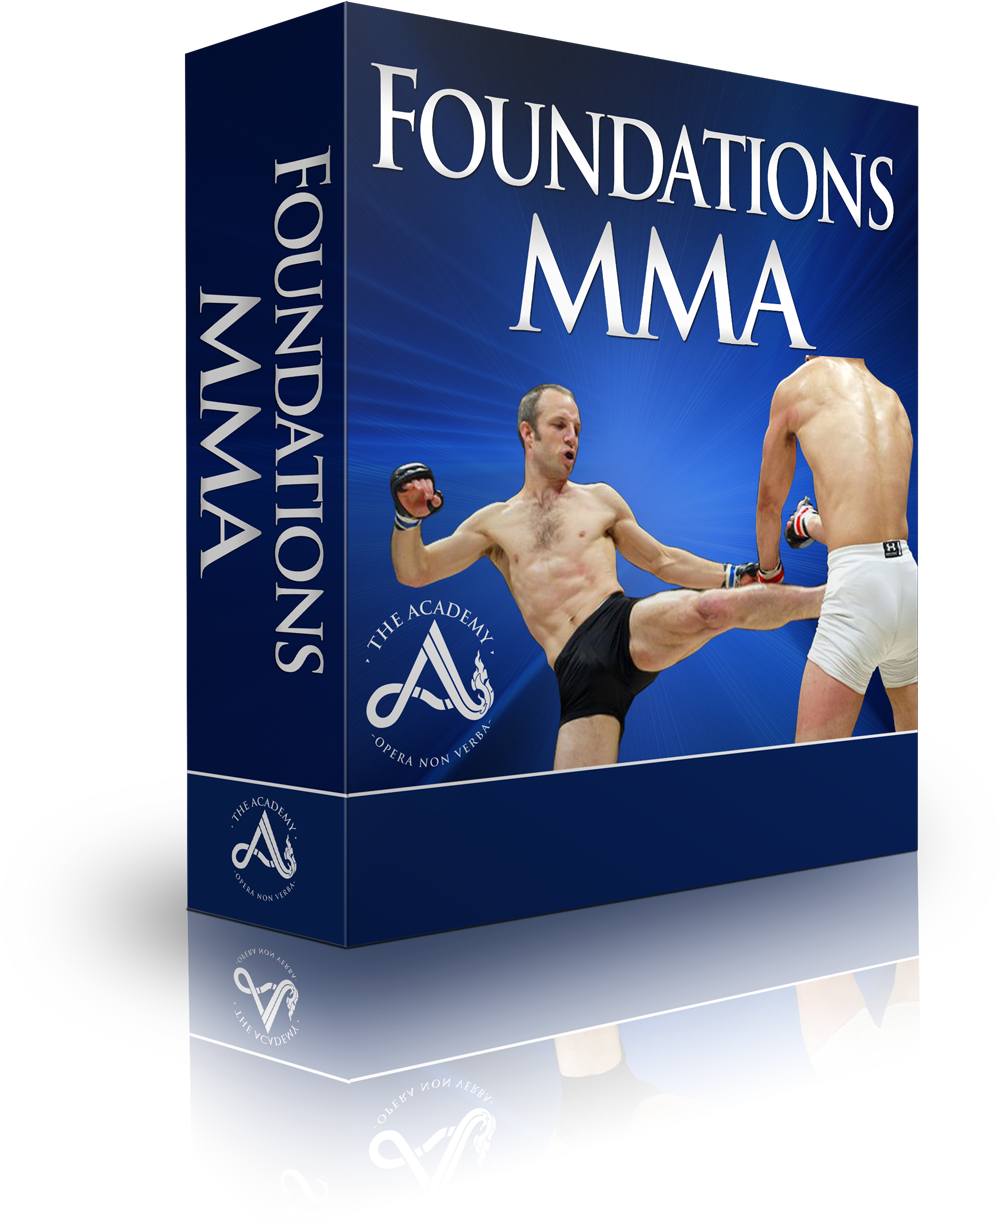 Foundations MMA